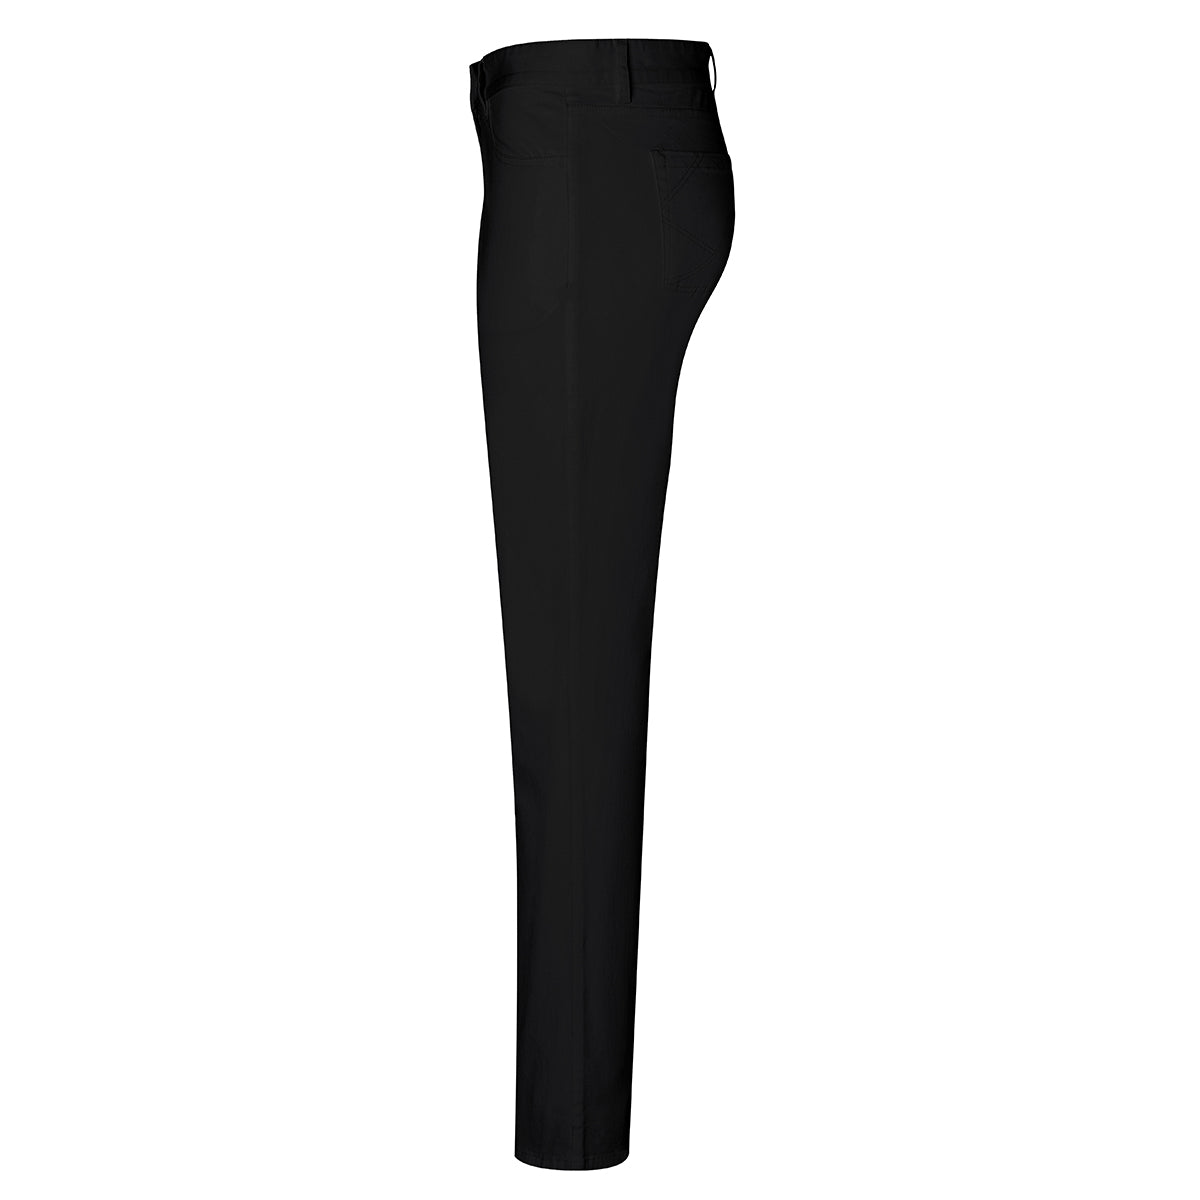 Karlowsky - 5-lomme bukser til damer - Sort - Størrelse: 48